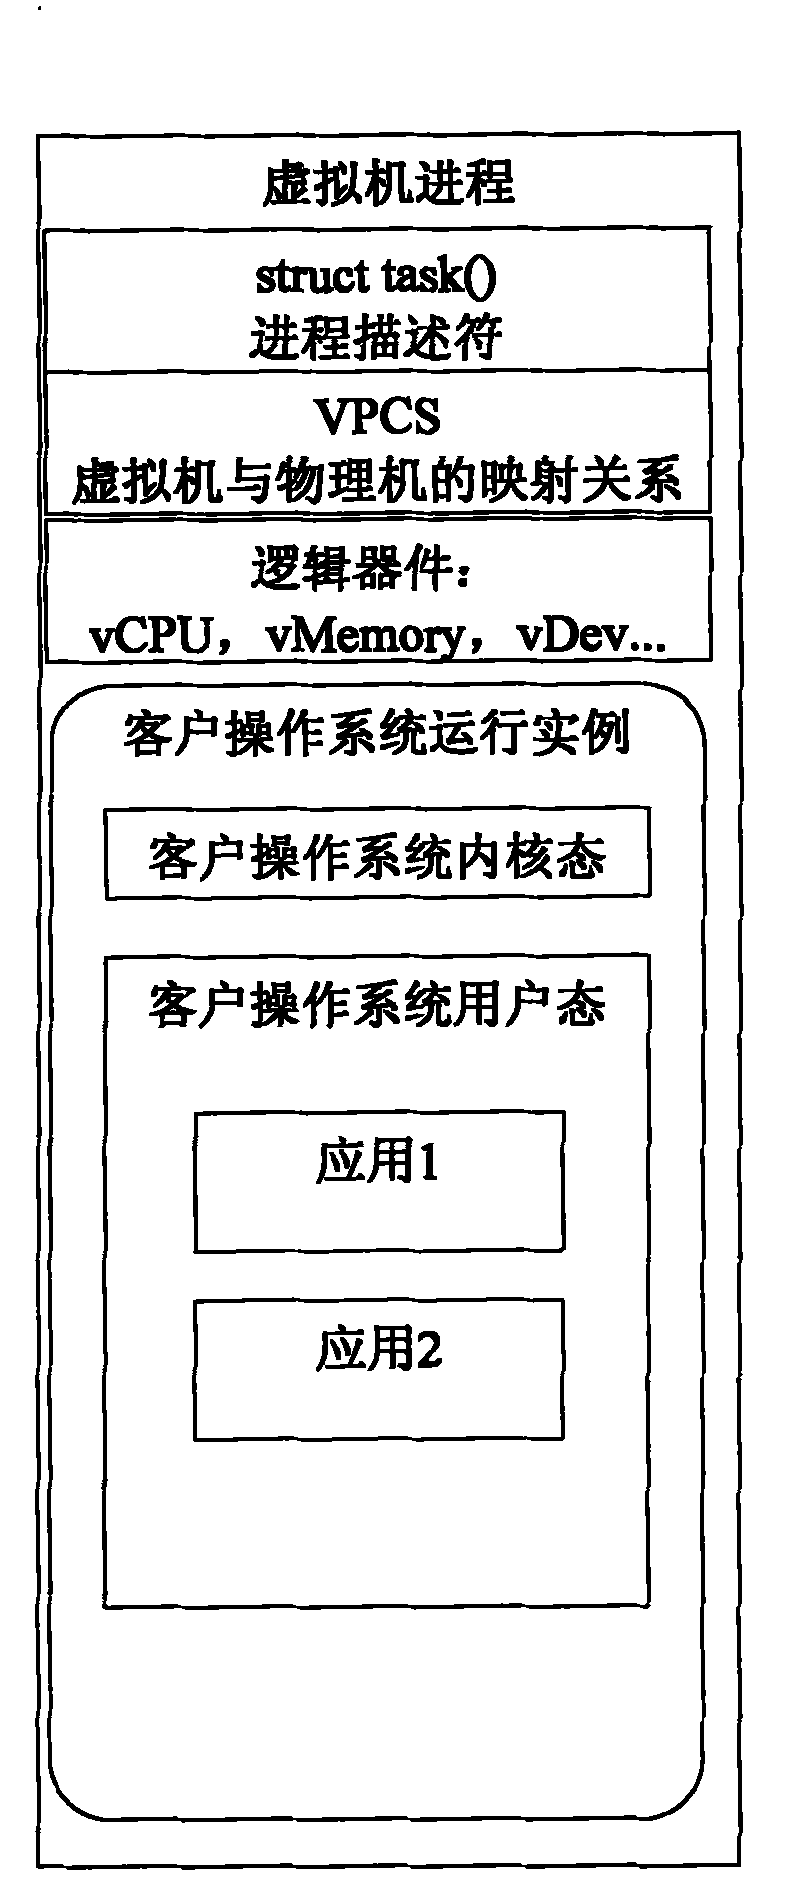 Method for implementing organizational architecture mode of kernel-based virtual machine (KVM)